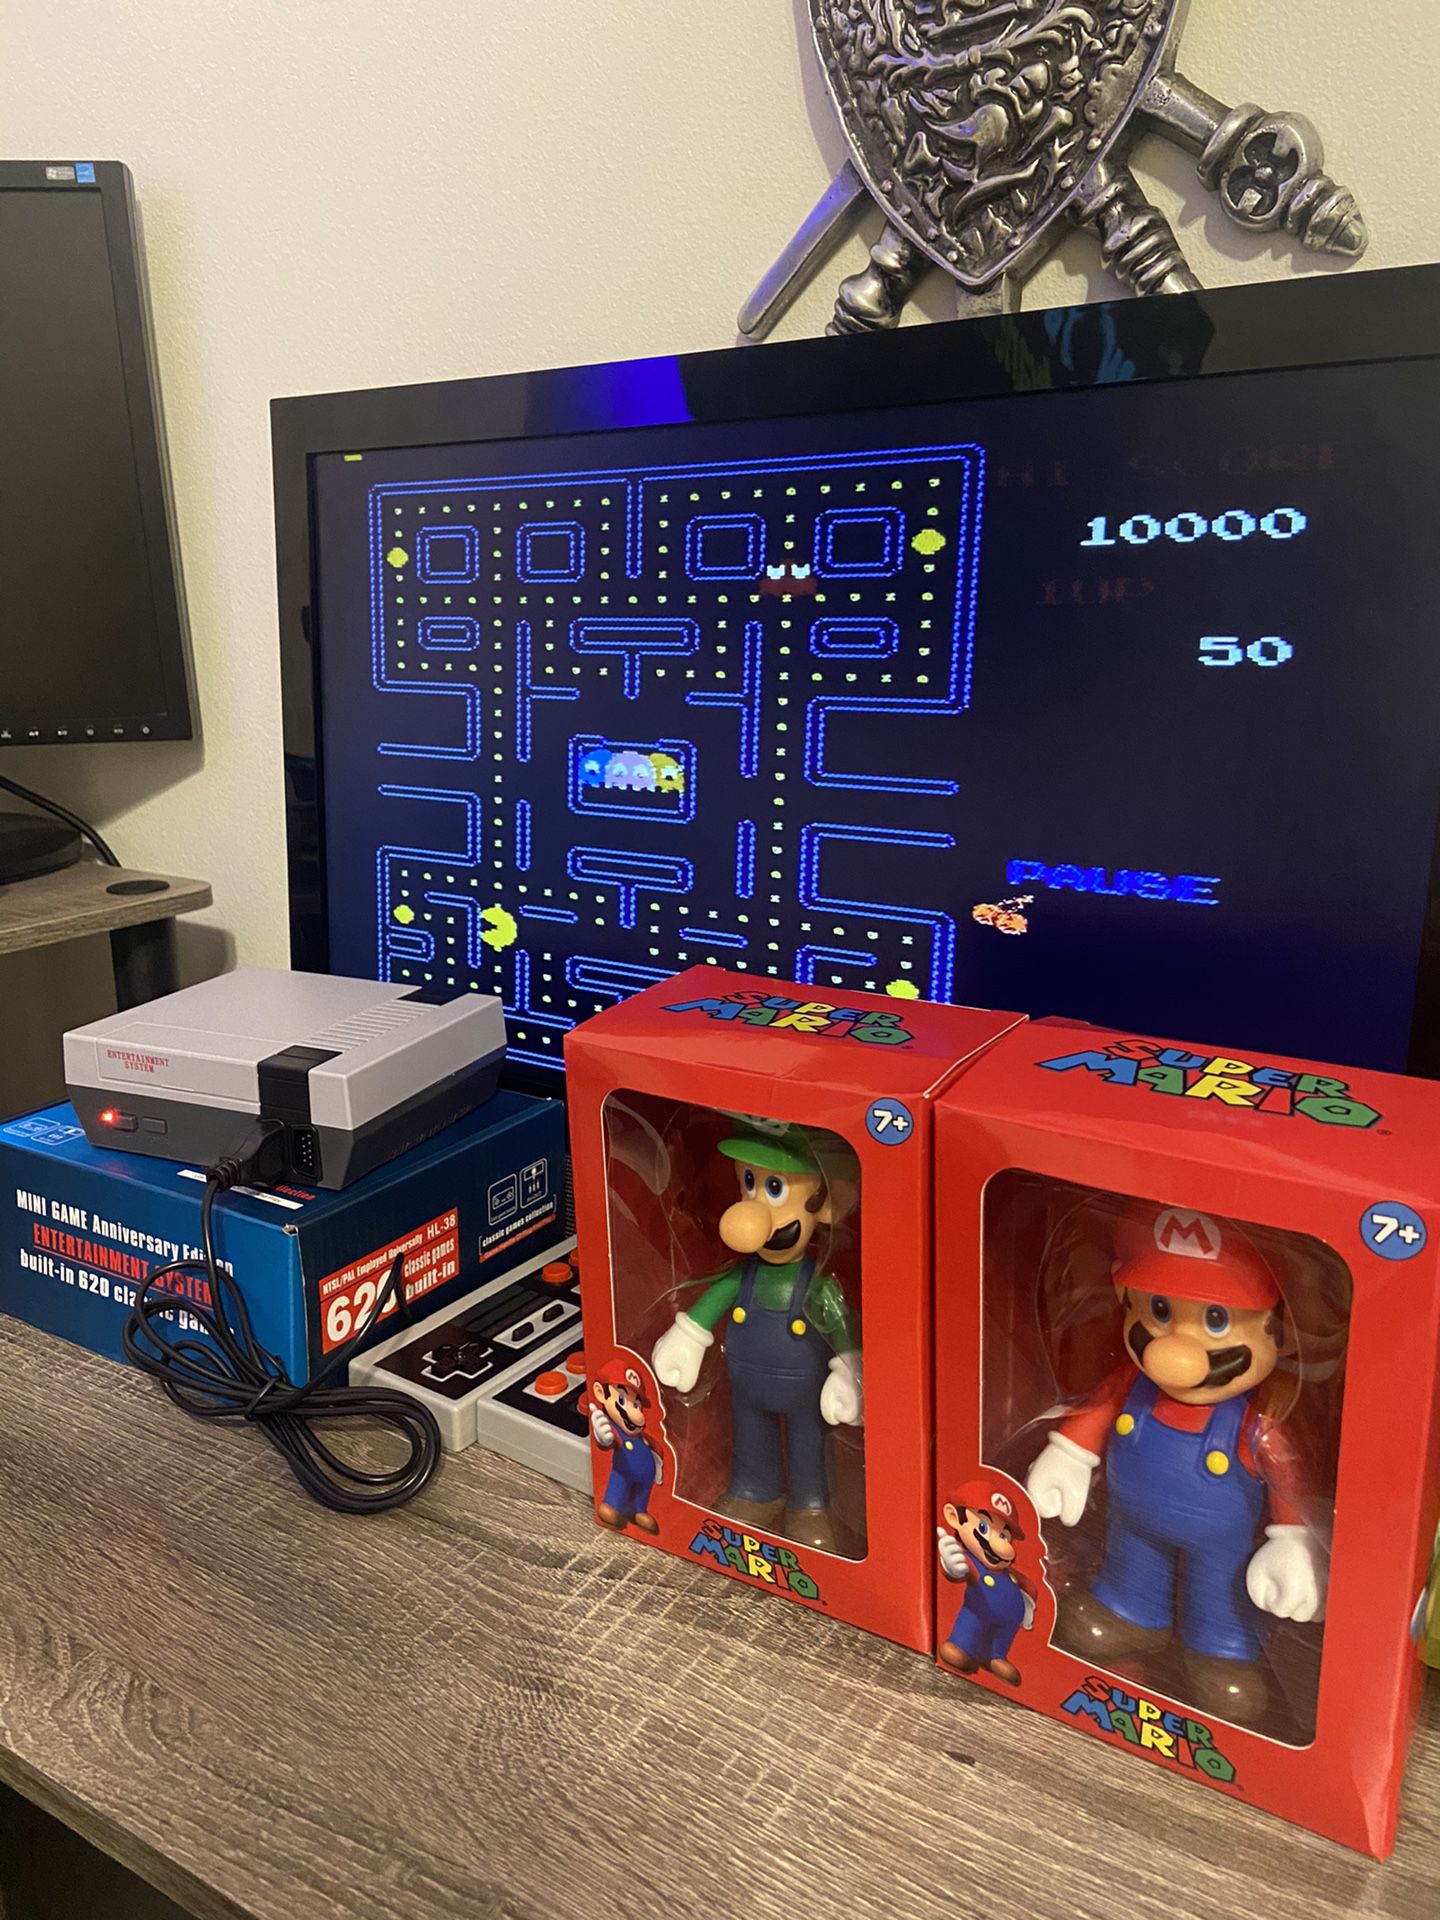 Retro mini Nintendo Ness built in 620 Games classic Arcade games 🕹 + MARIO AND LUIGI FIGURE ✅✅ SHIPPING AVAILABLE🚚